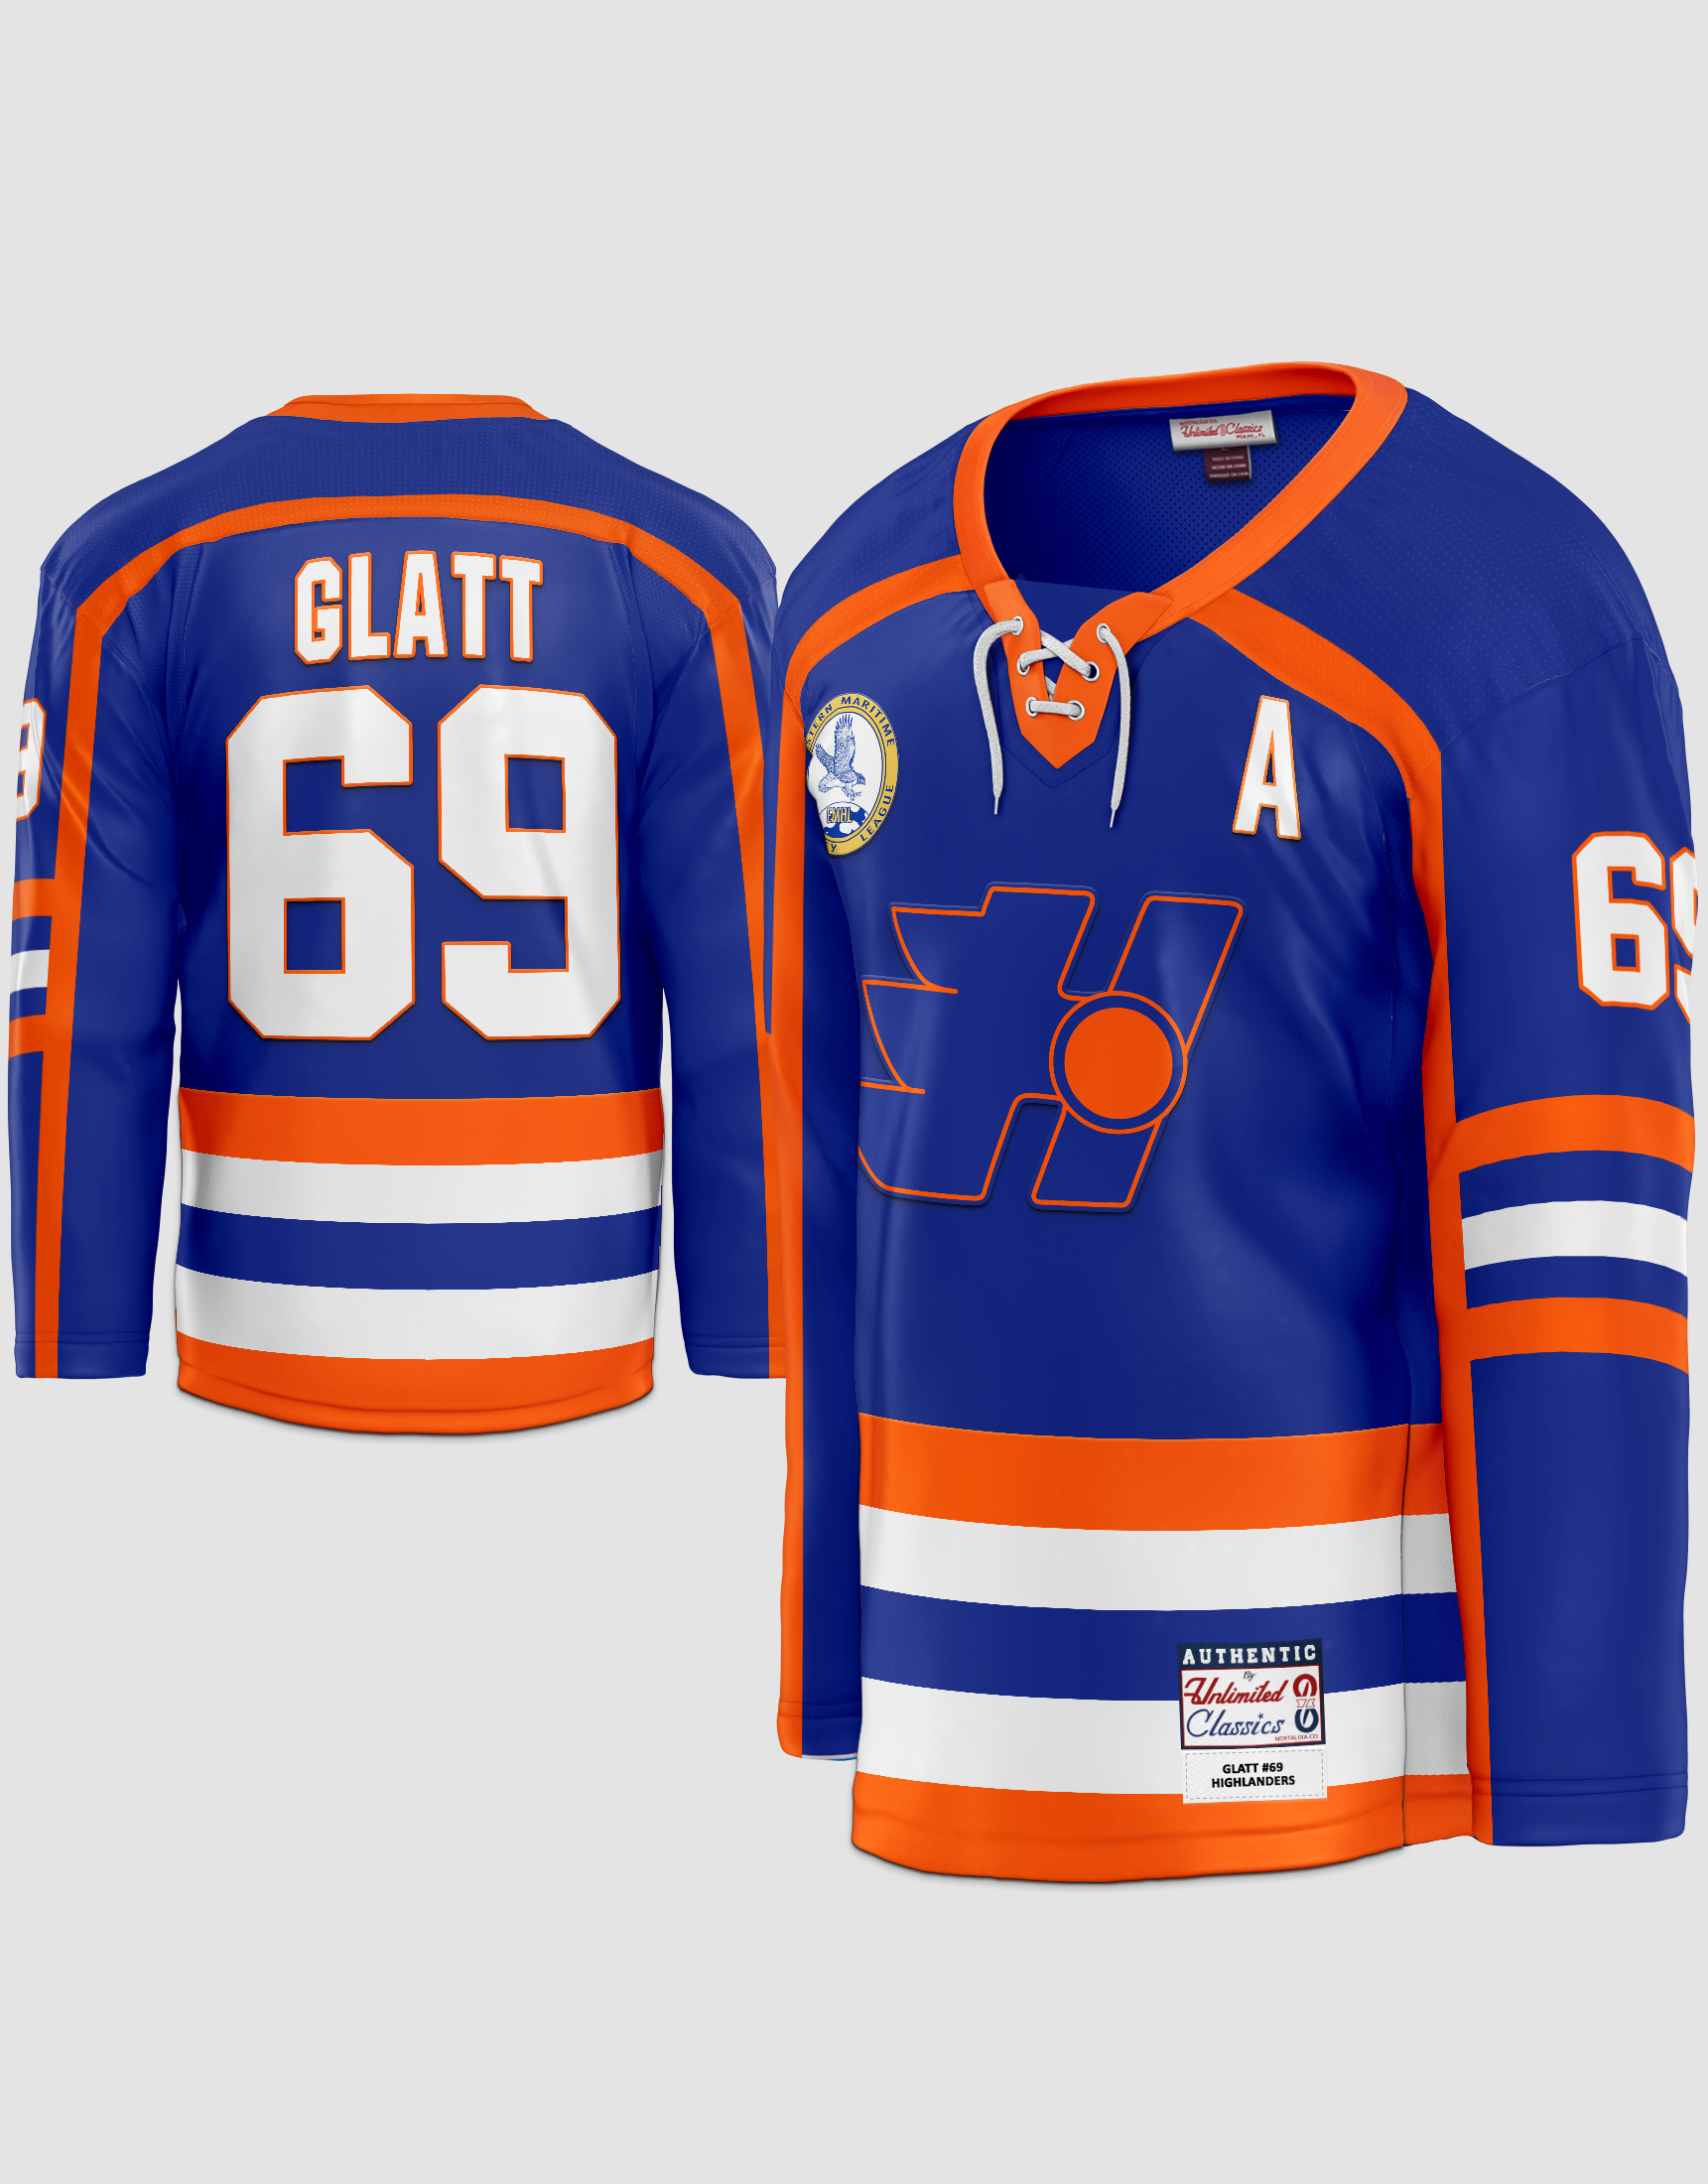  boriz Doug Glatt Halifax Hockey Jersey Includes EMHL